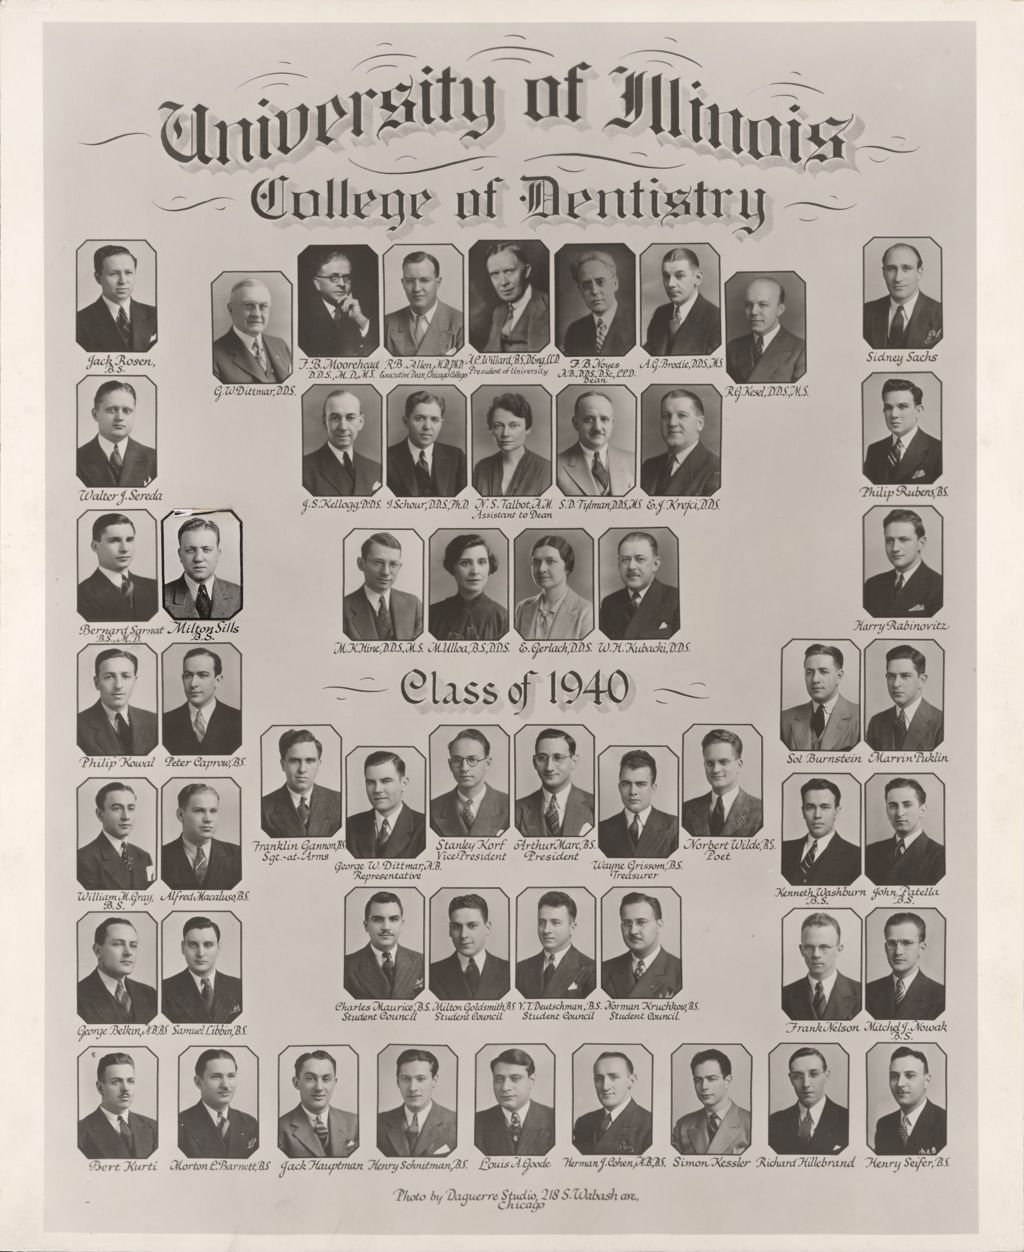 Miniature of 1940 graduating class, University of Illinois College of Dentistry